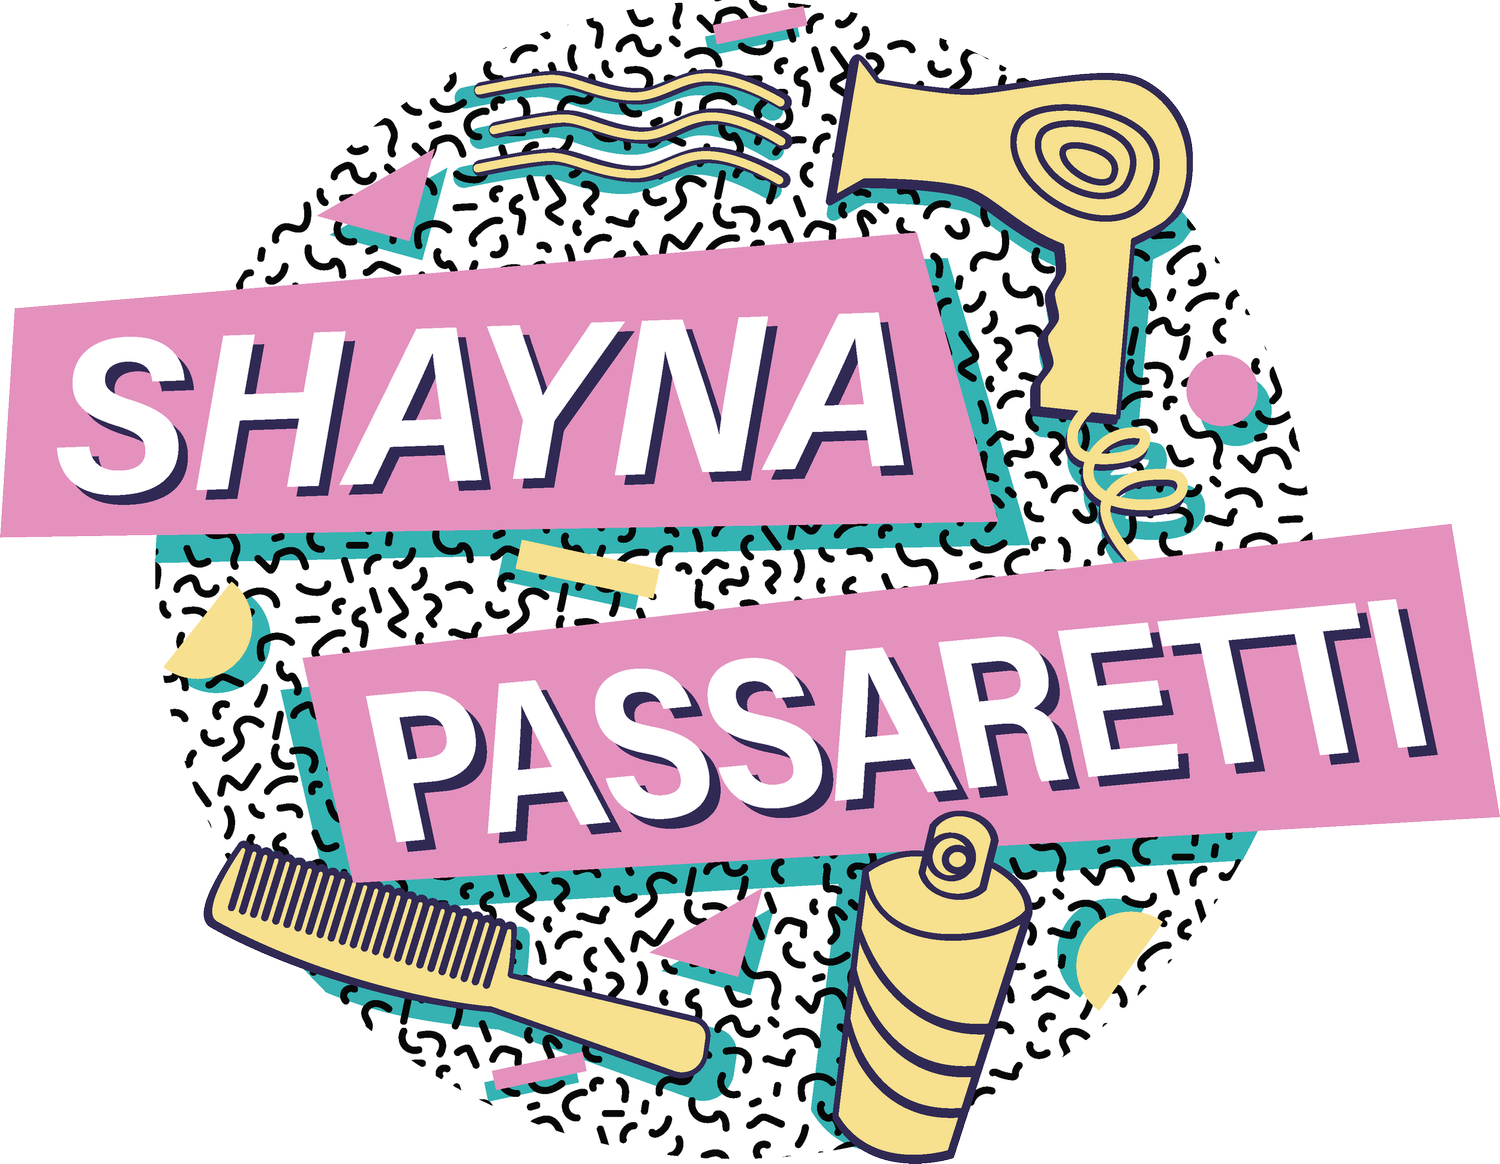 Shayna Passaretti